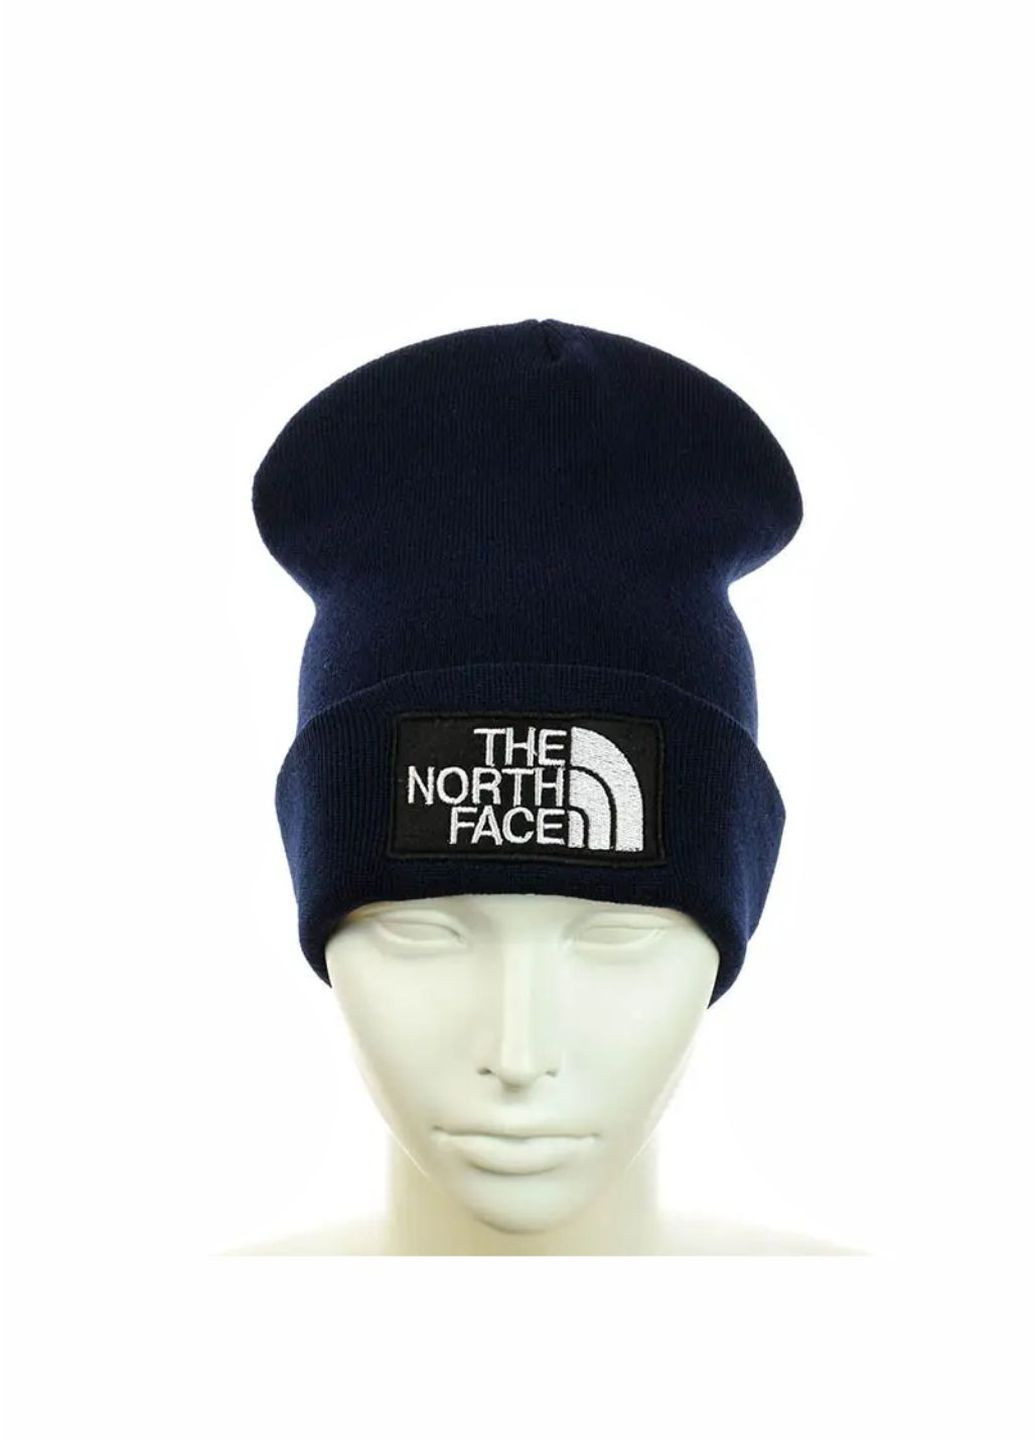 Молодіжна шапка біні лонг The North Face (Норт Фейс) No Brand бини лонг (276260579)